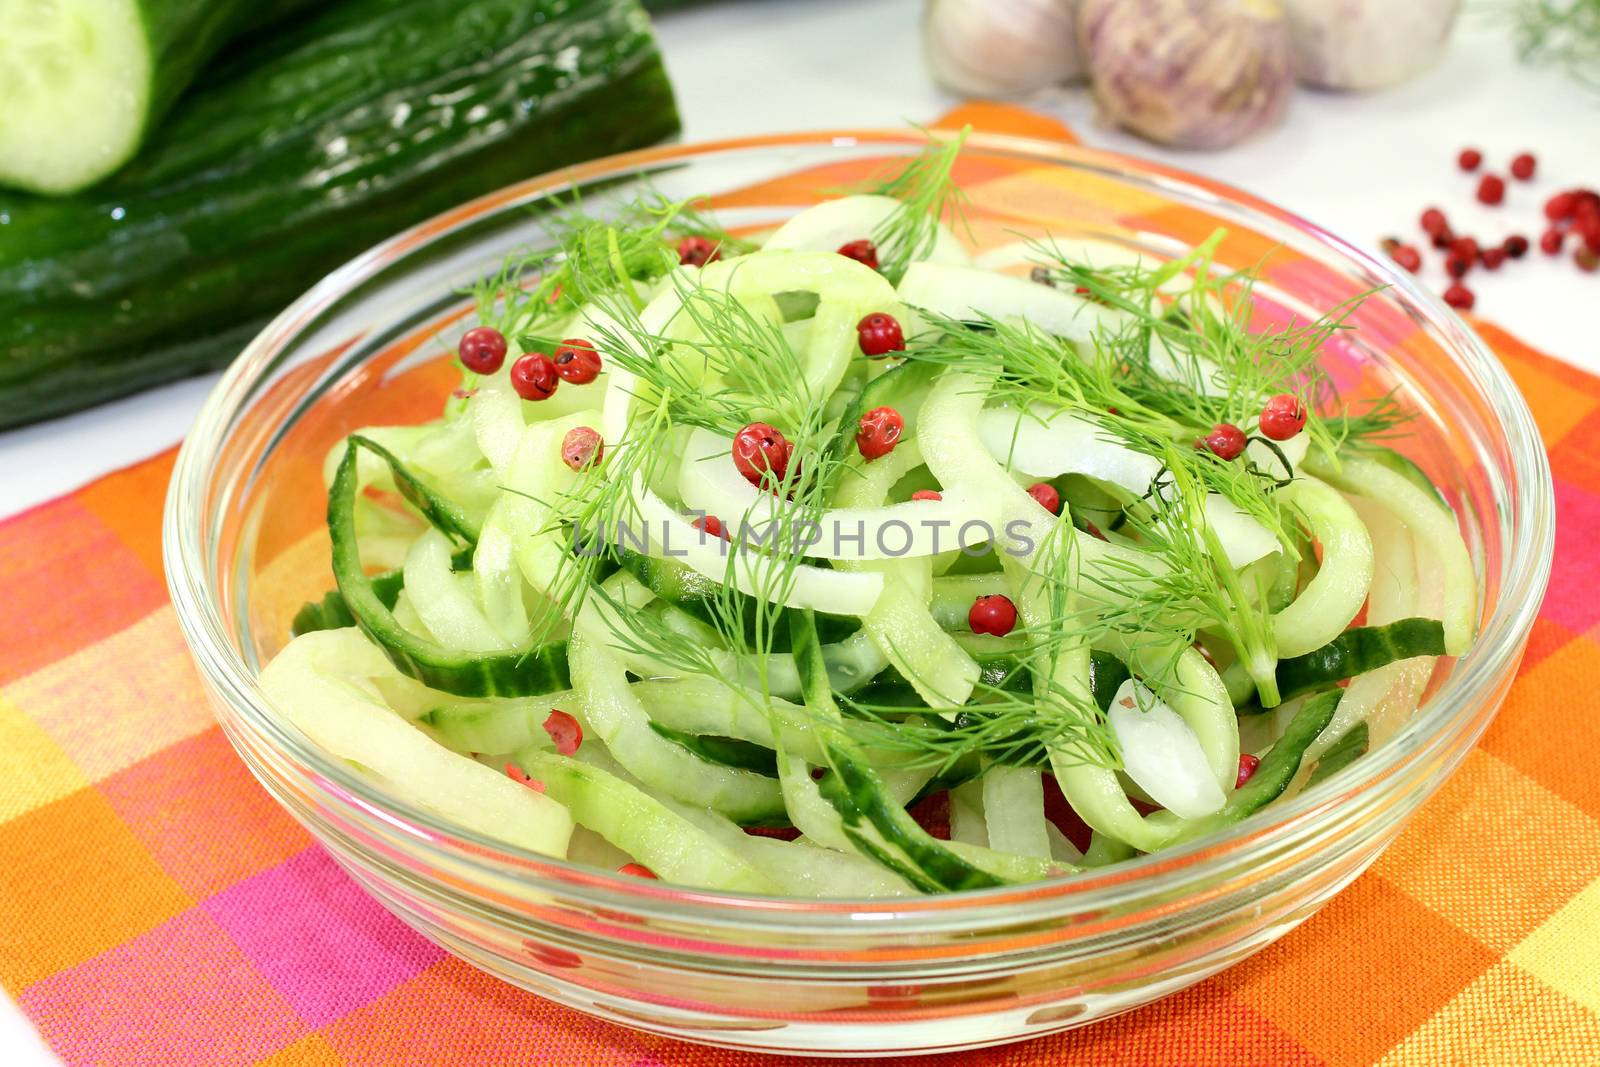 Cucumber salad by silencefoto